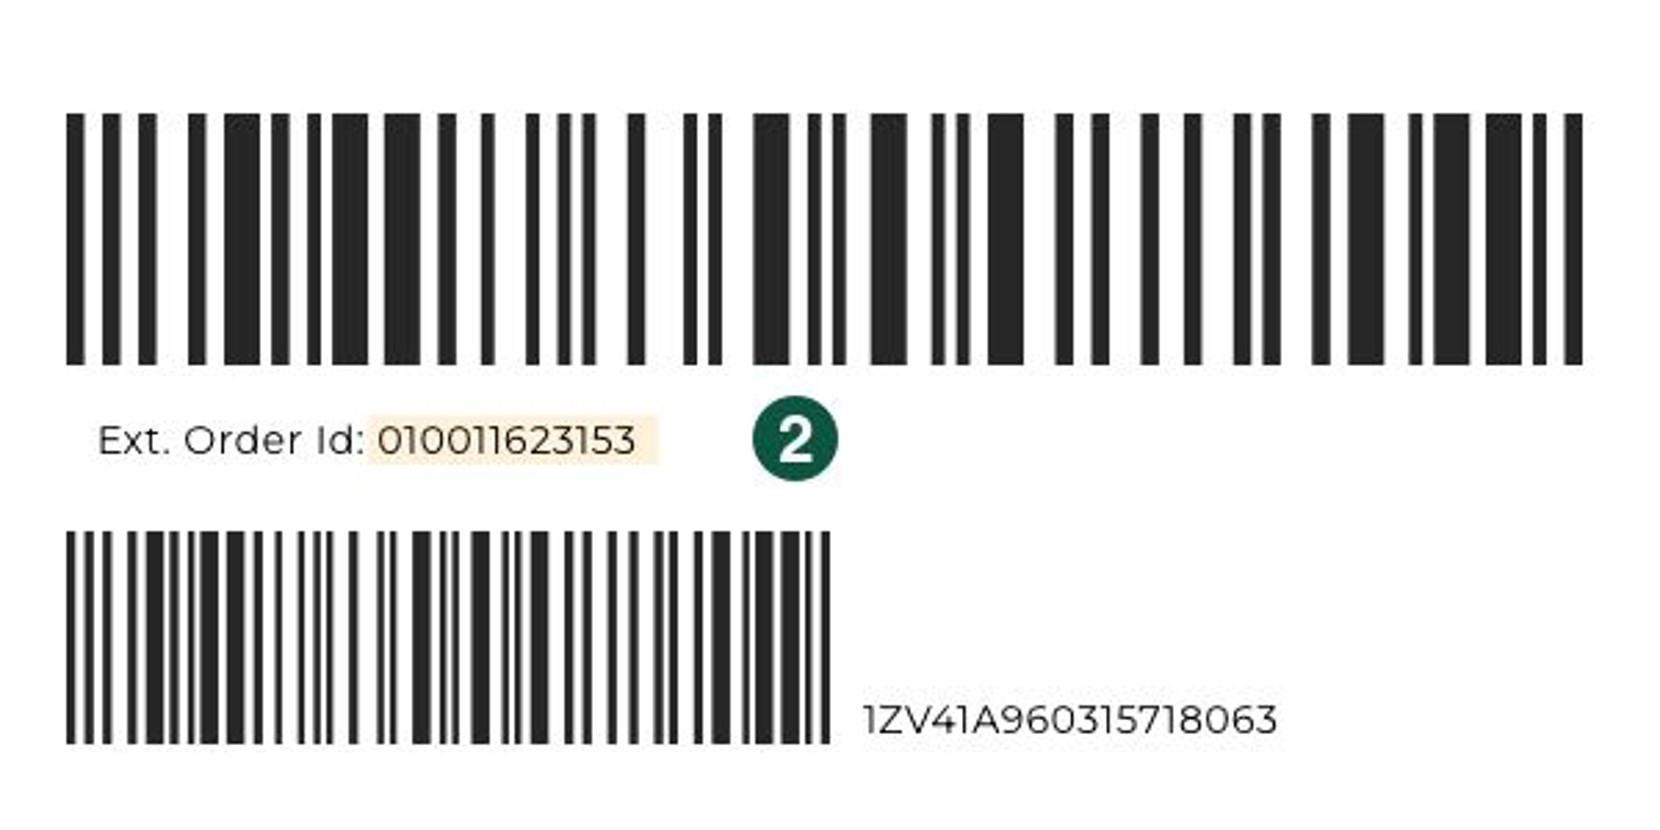 Alternate packing slip with 12 digit order number highlighted